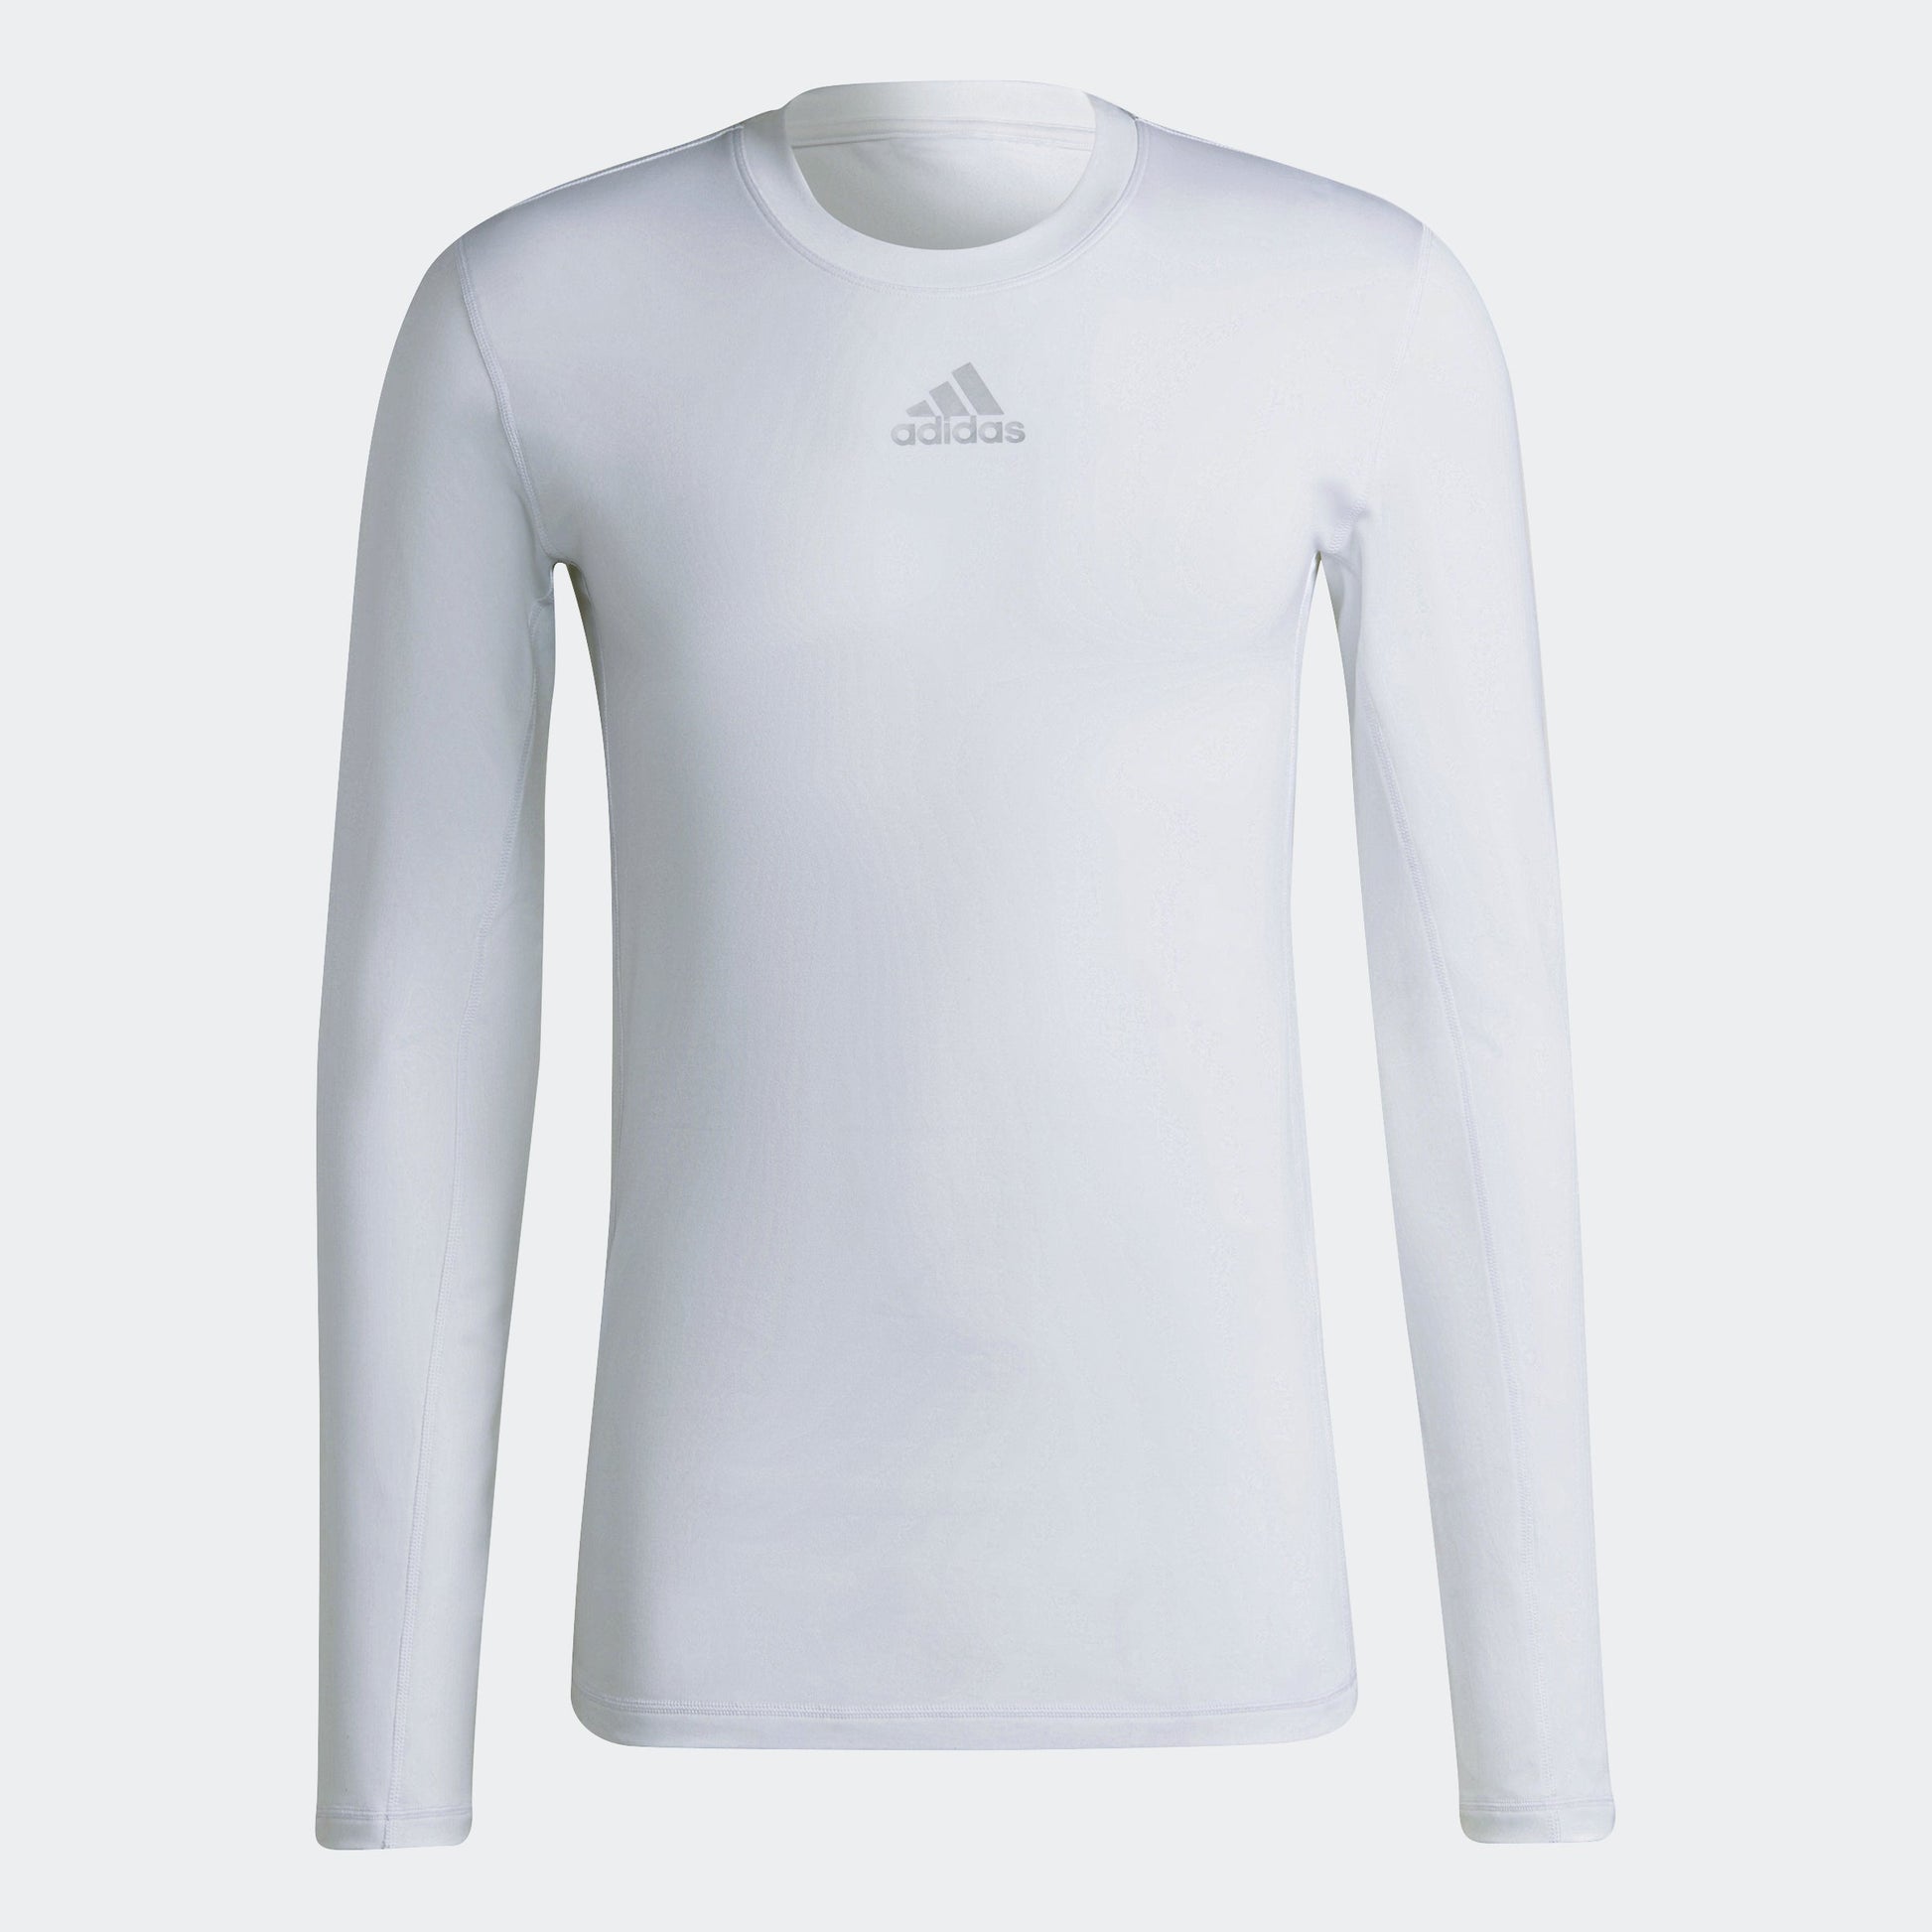  adidas mens Team Base Tee Shirt, Team Light Grey, X-Small US :  Clothing, Shoes & Jewelry